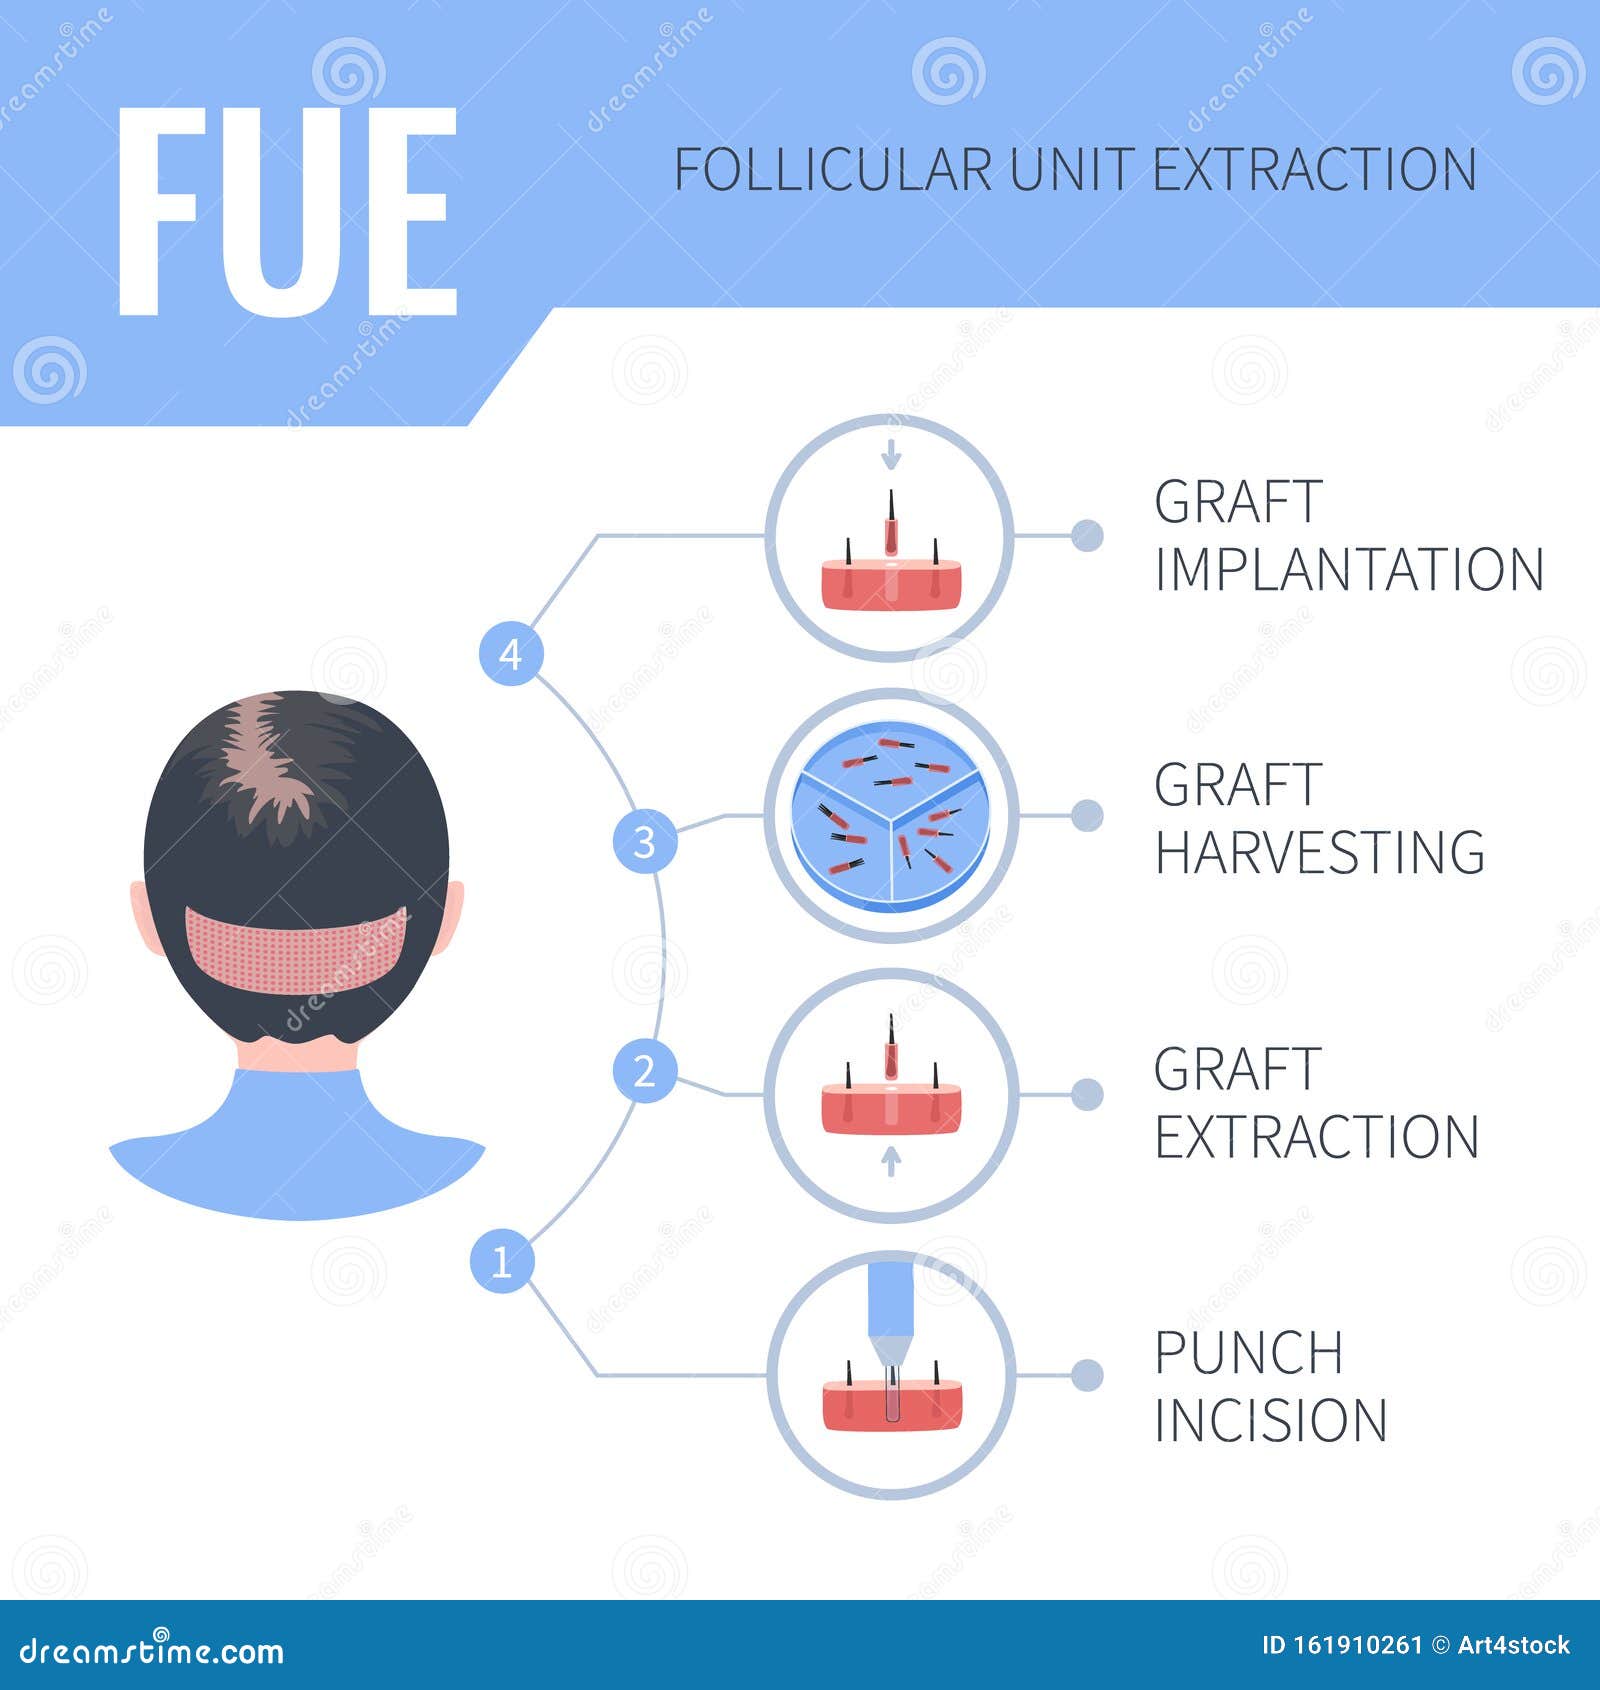 fue hair transplantation medical infographics for women